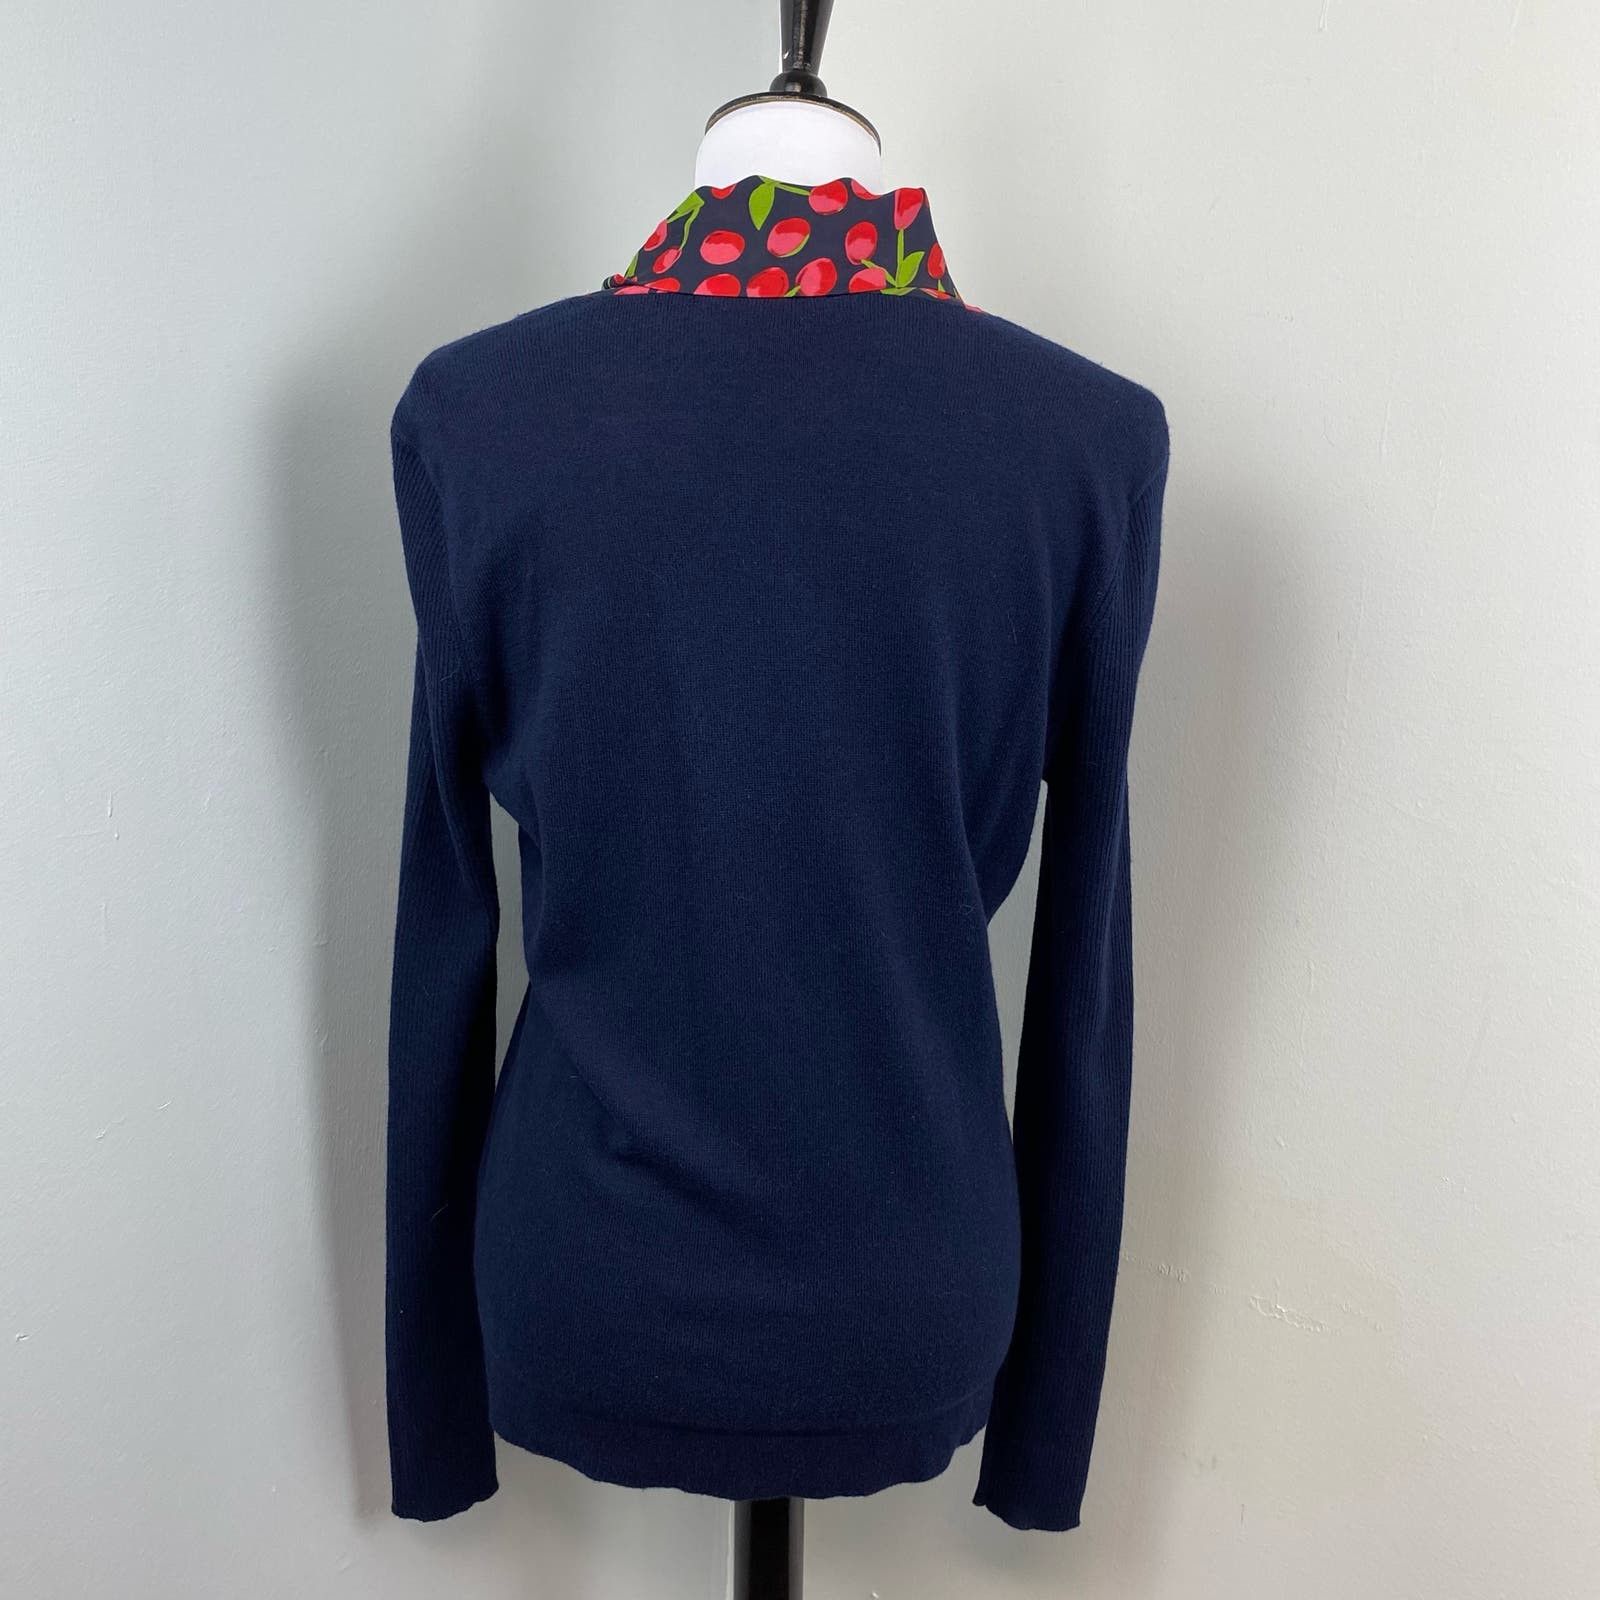 Tory Burch Tory Burch Navy Cashmere Silk Cherry Print Neck Tie Sweater Size L / US 10 / IT 46 - 5 Thumbnail